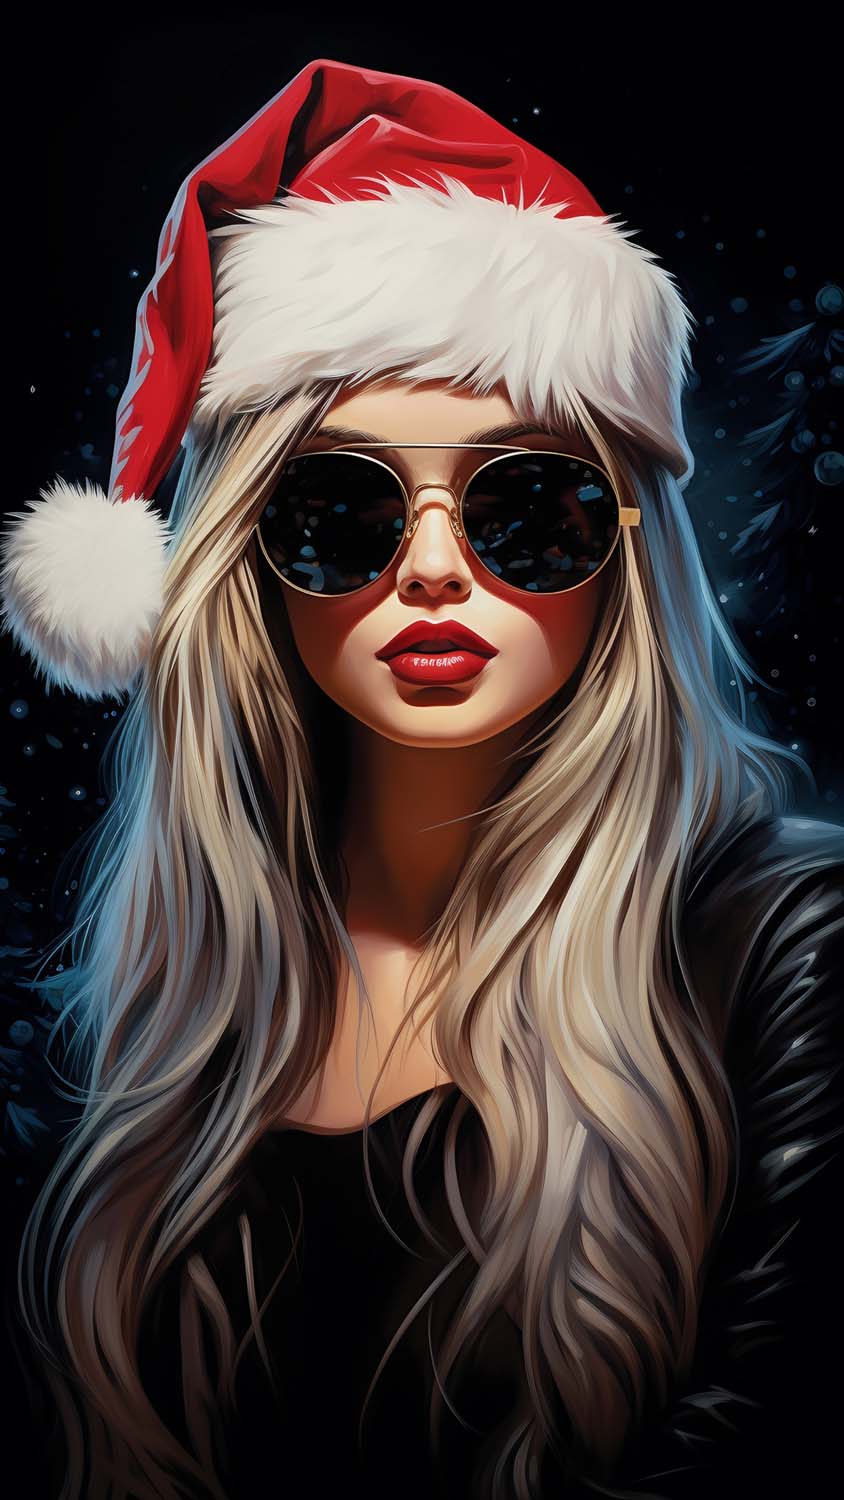 Christmas Girl iPhone Wallpaper 4K